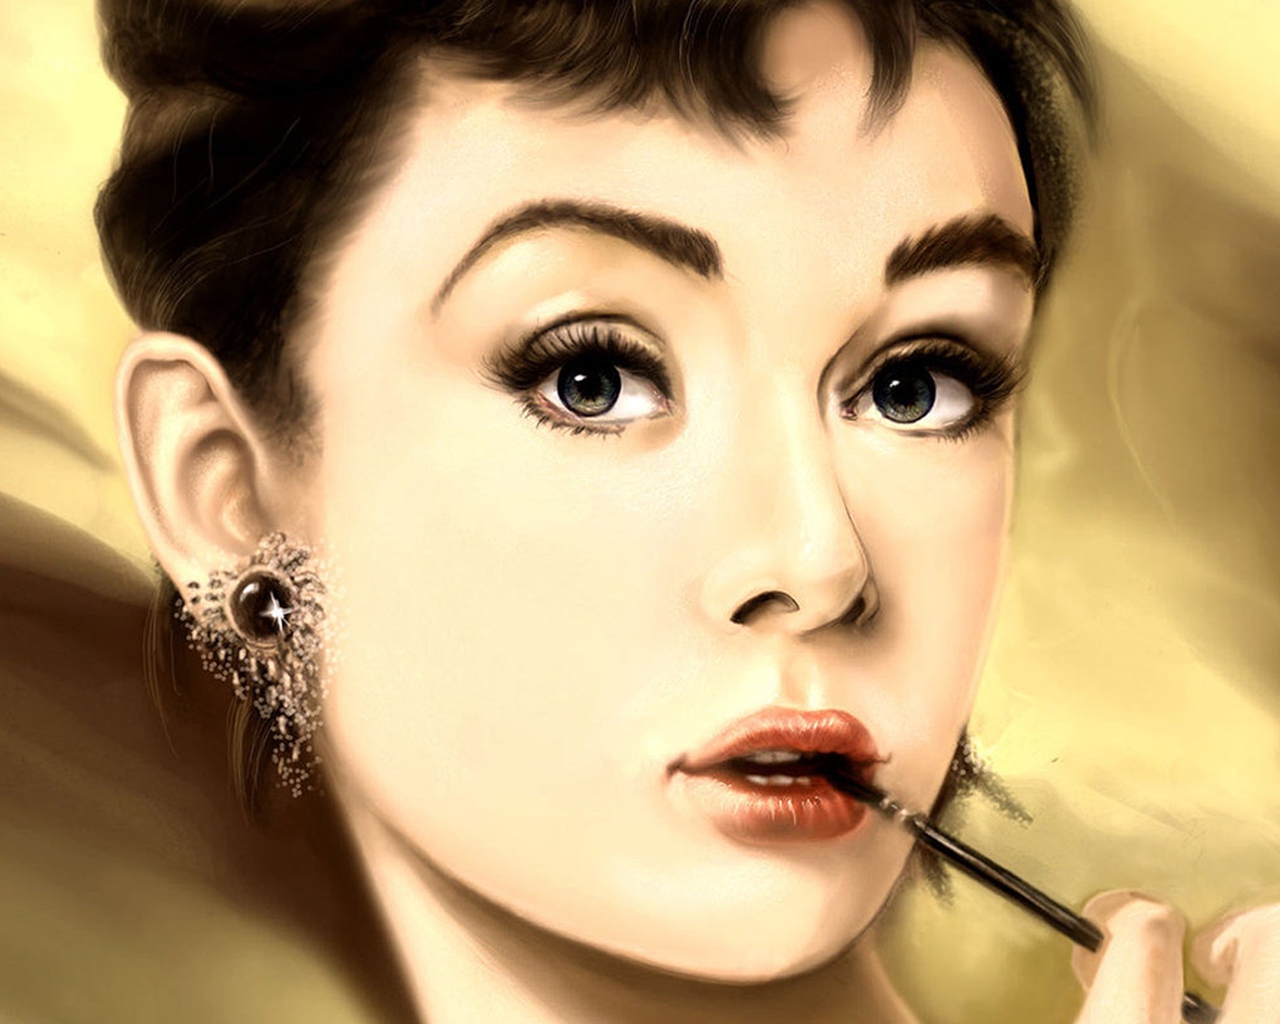 Audrey Hepburn Portrait Painting for 1280 x 1024 resolution